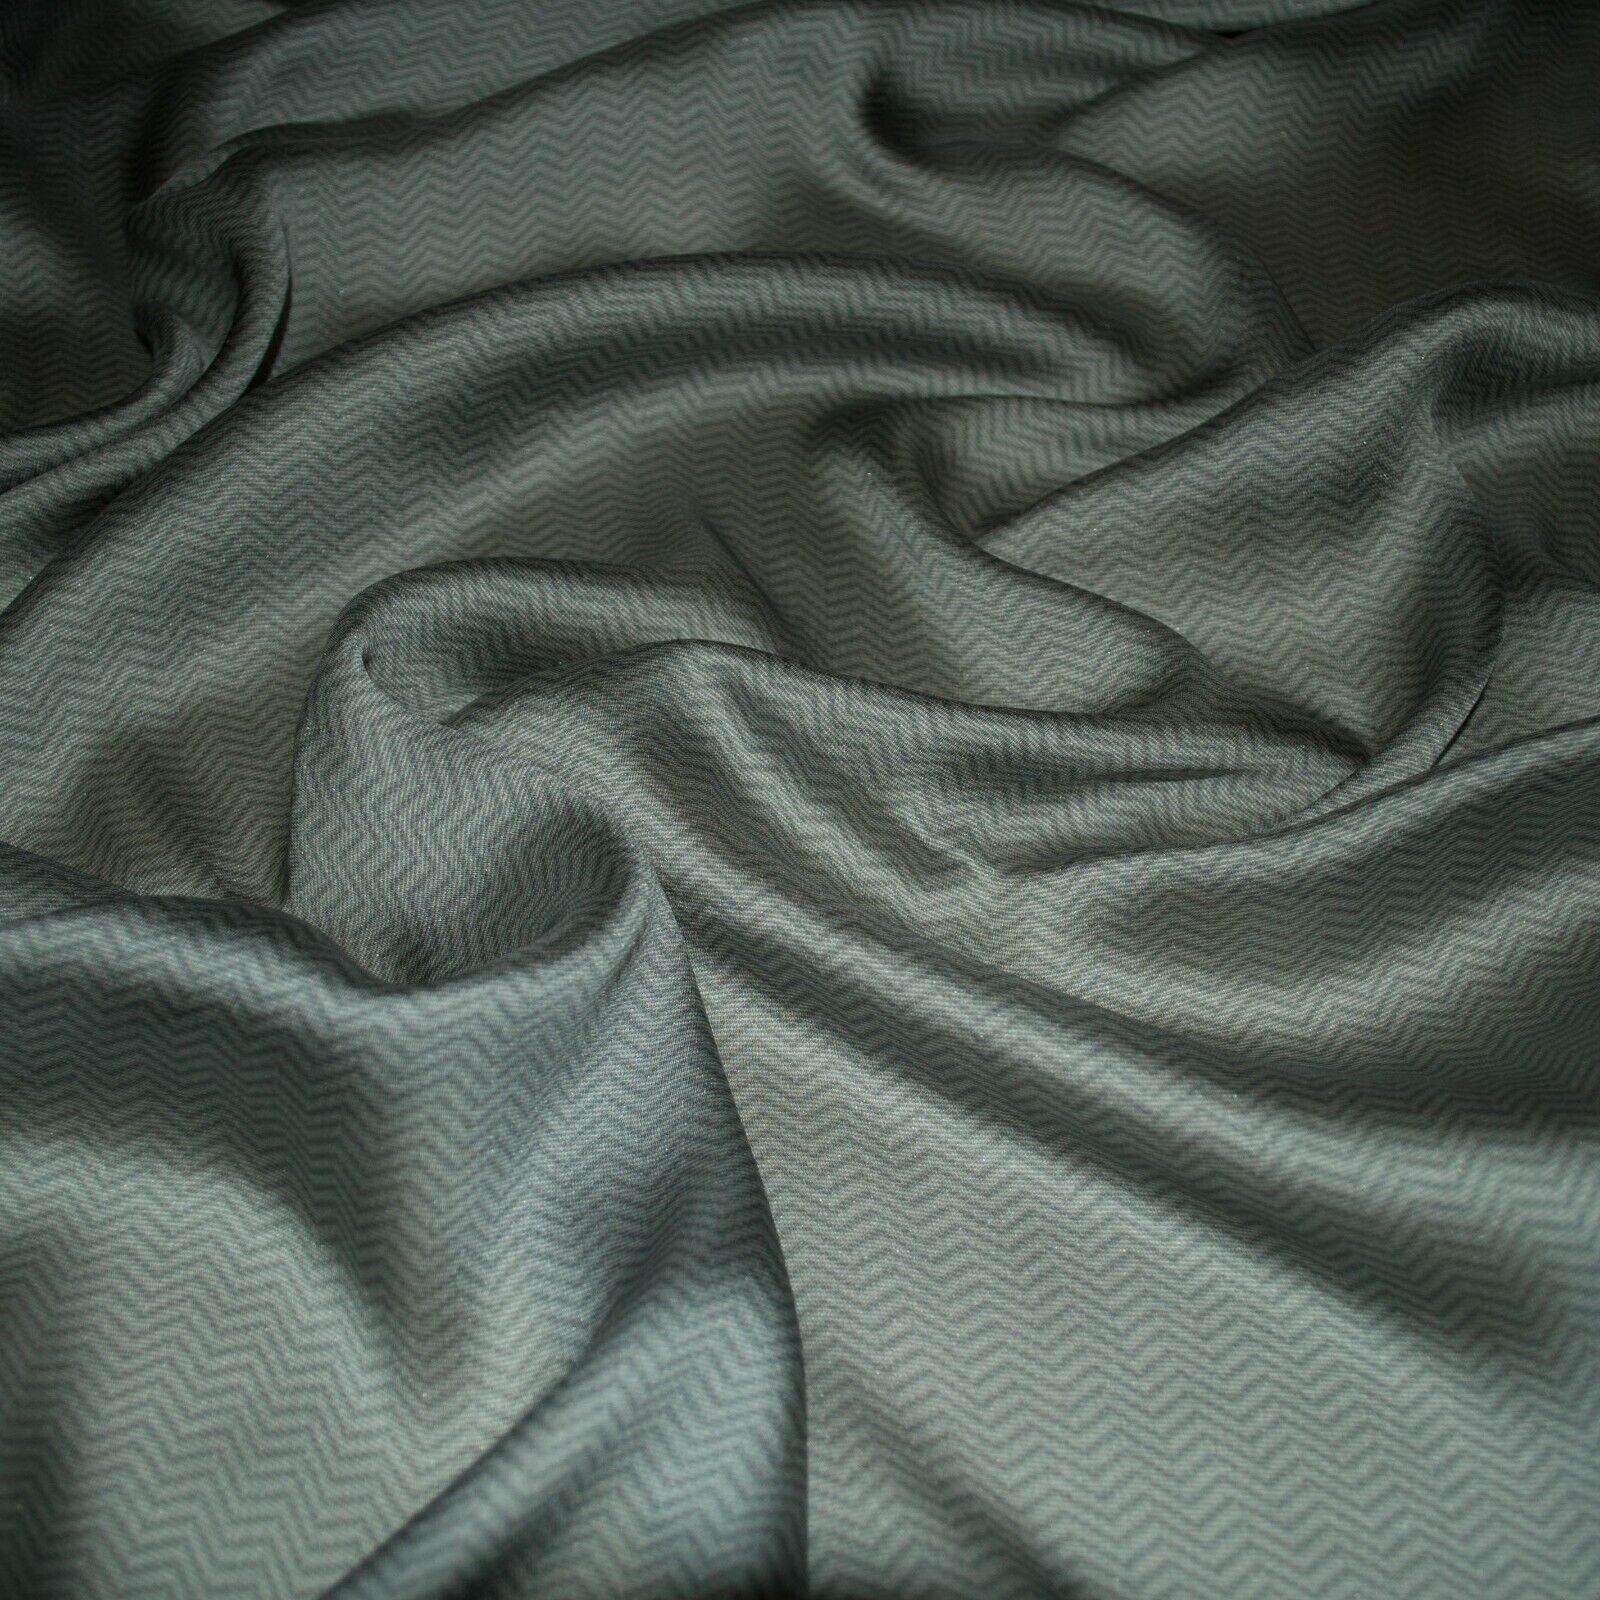 Designers pure mulberry silk chiffon fabric. Made in Italy. Zig zag